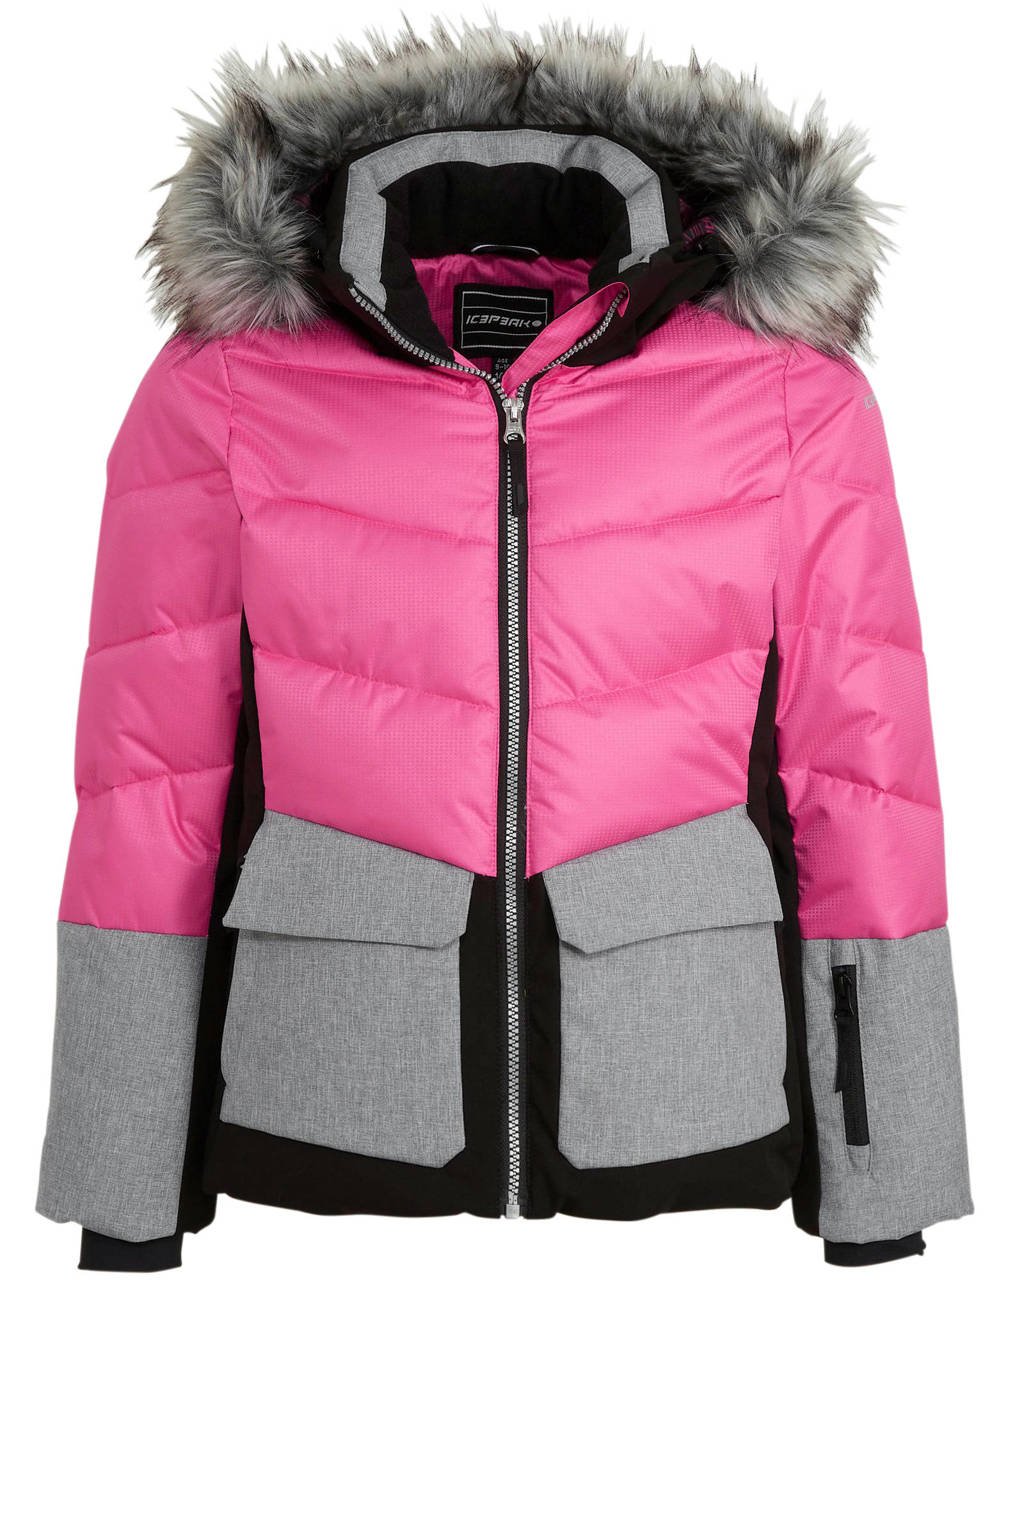 Icepeak ski-jack Lillie JR roze/zwart/grijs, Roze/zwart/grijs